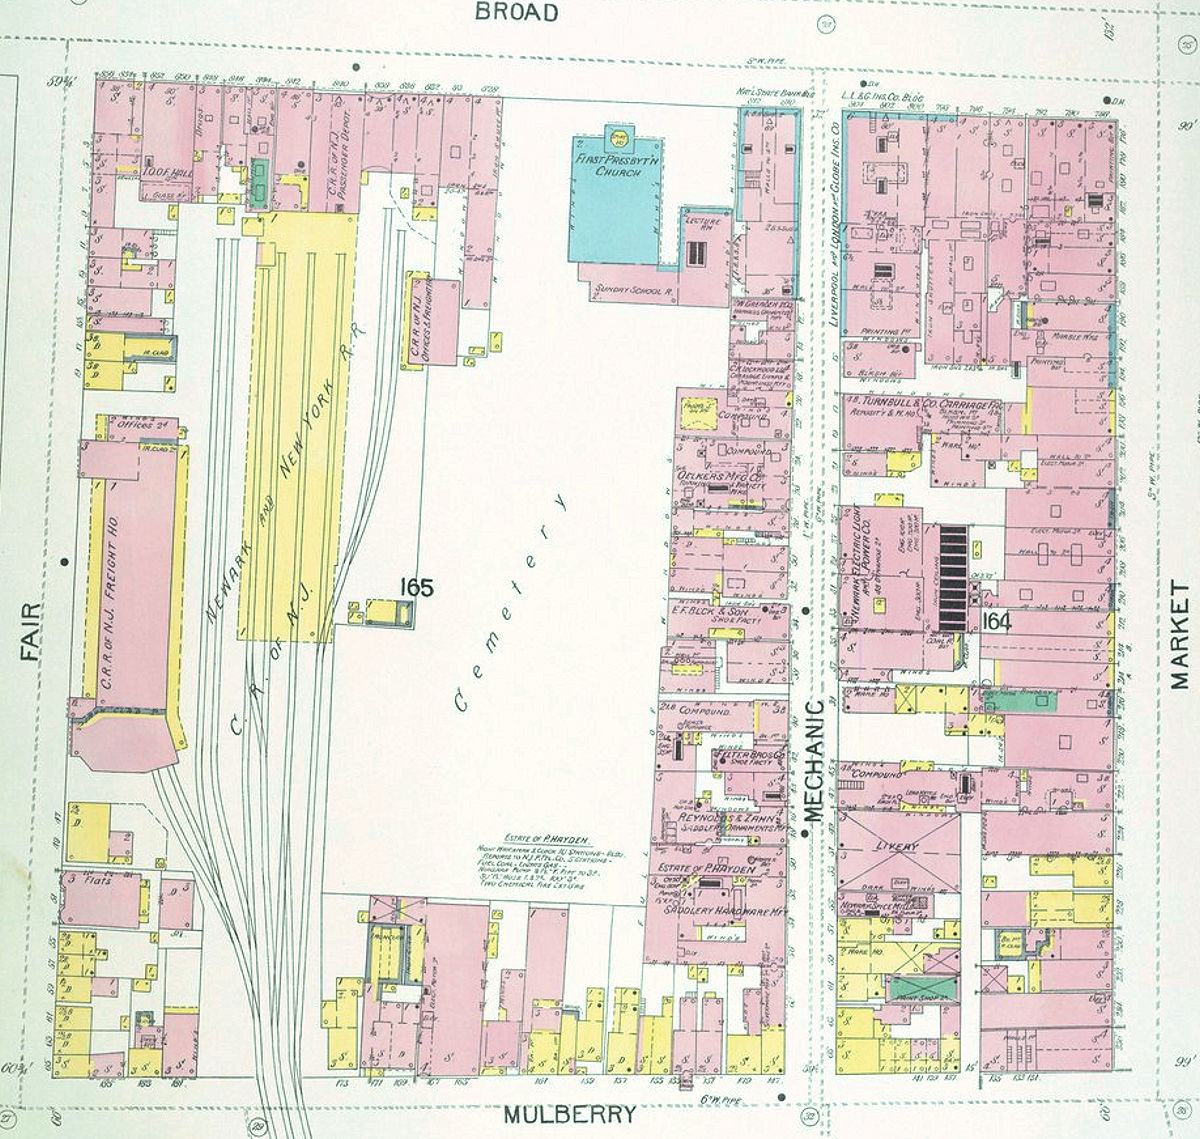 1892 Map
818, 820 Broad Street
